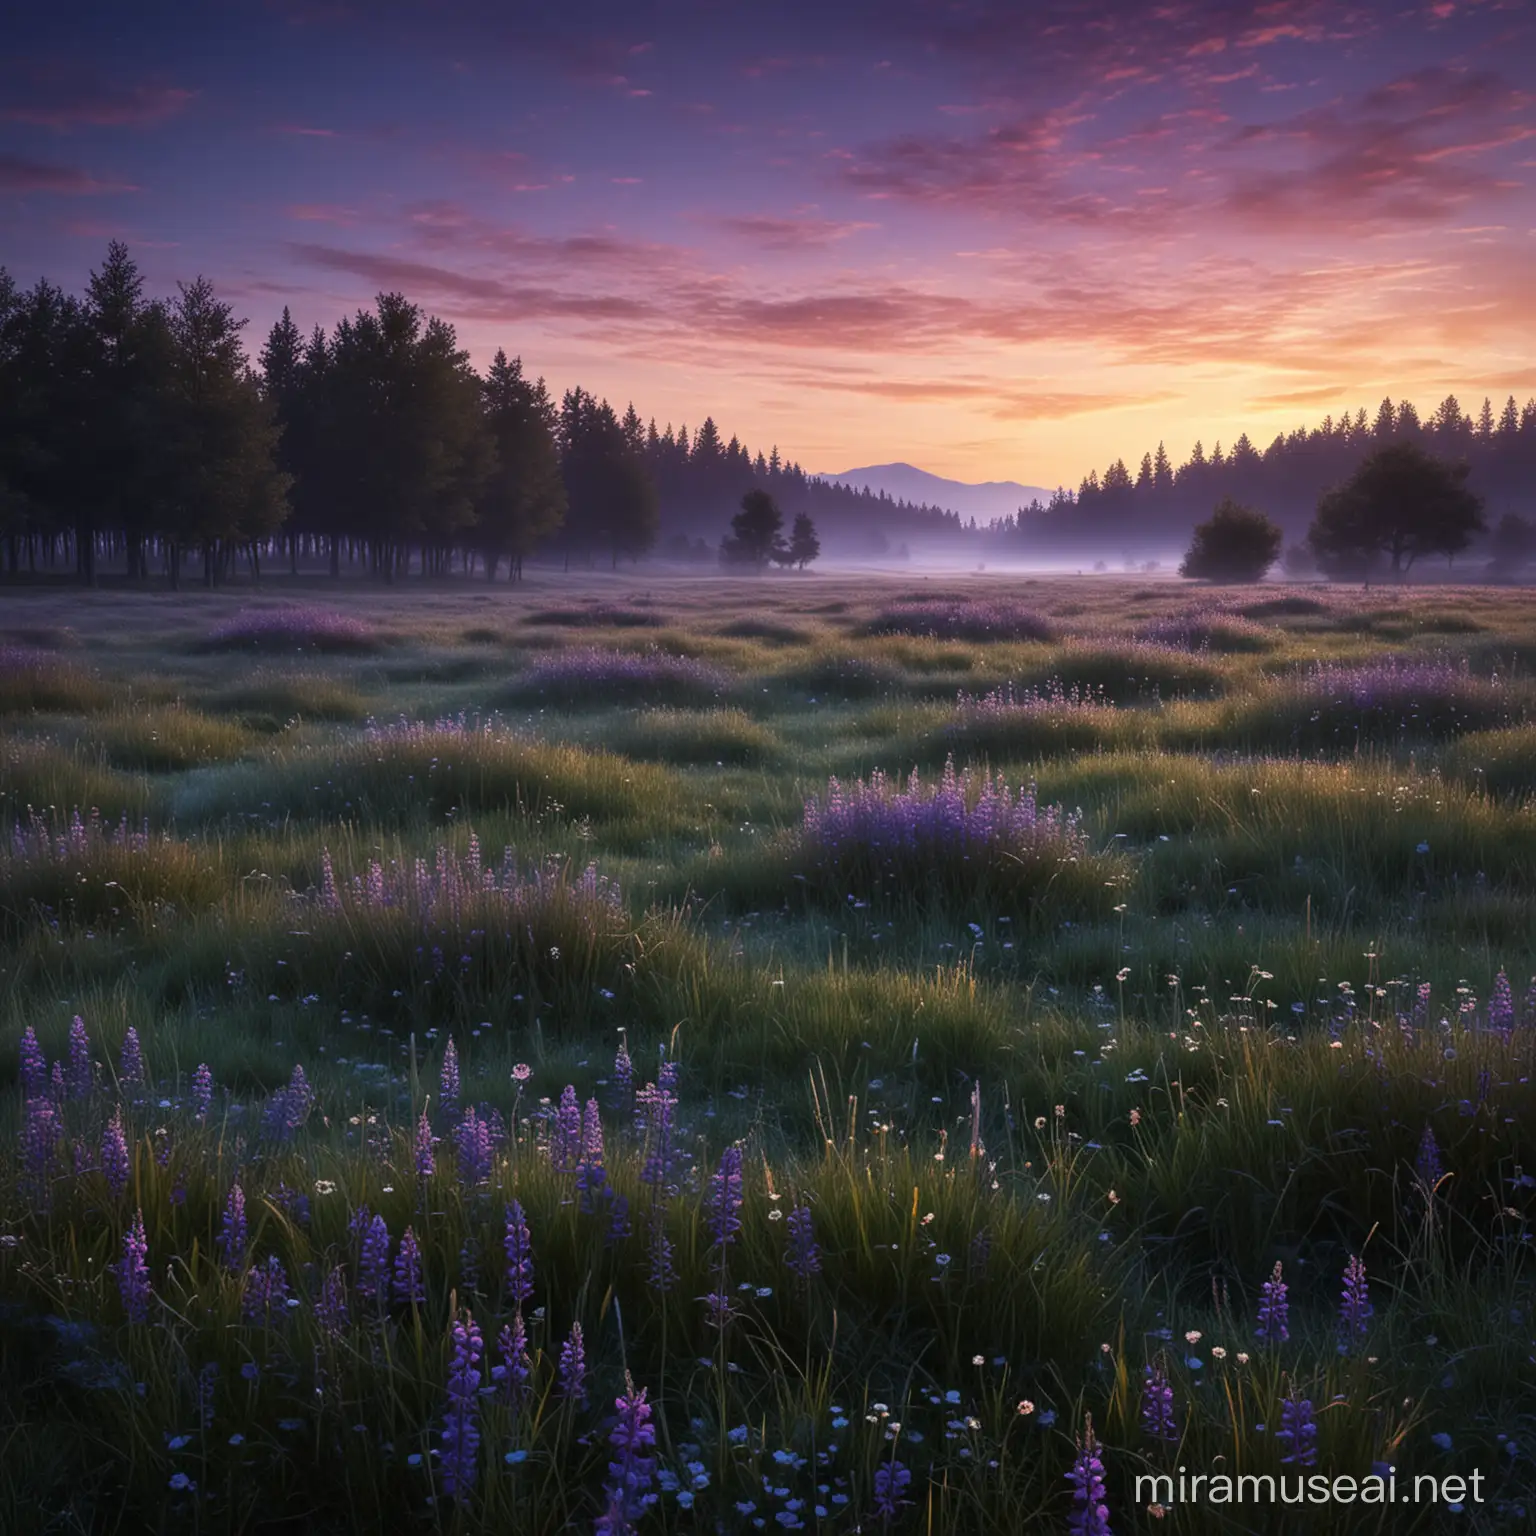 Enchanting Twilight Meadow Landscape with Glowing Flowers